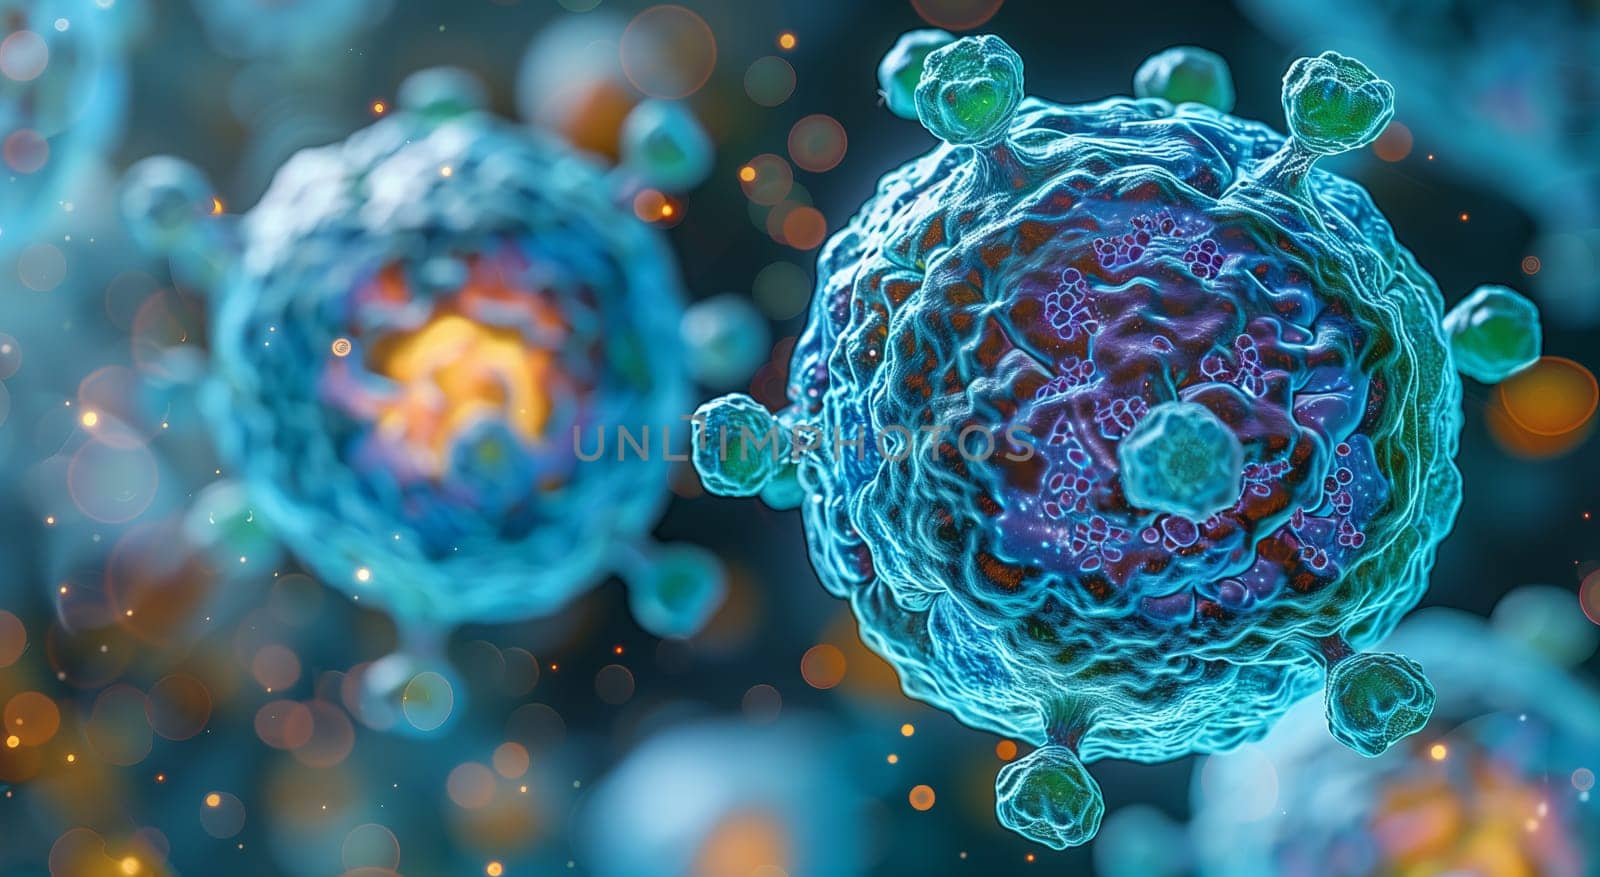 Fractal art of an electric blue virus in a cellular organism by richwolf